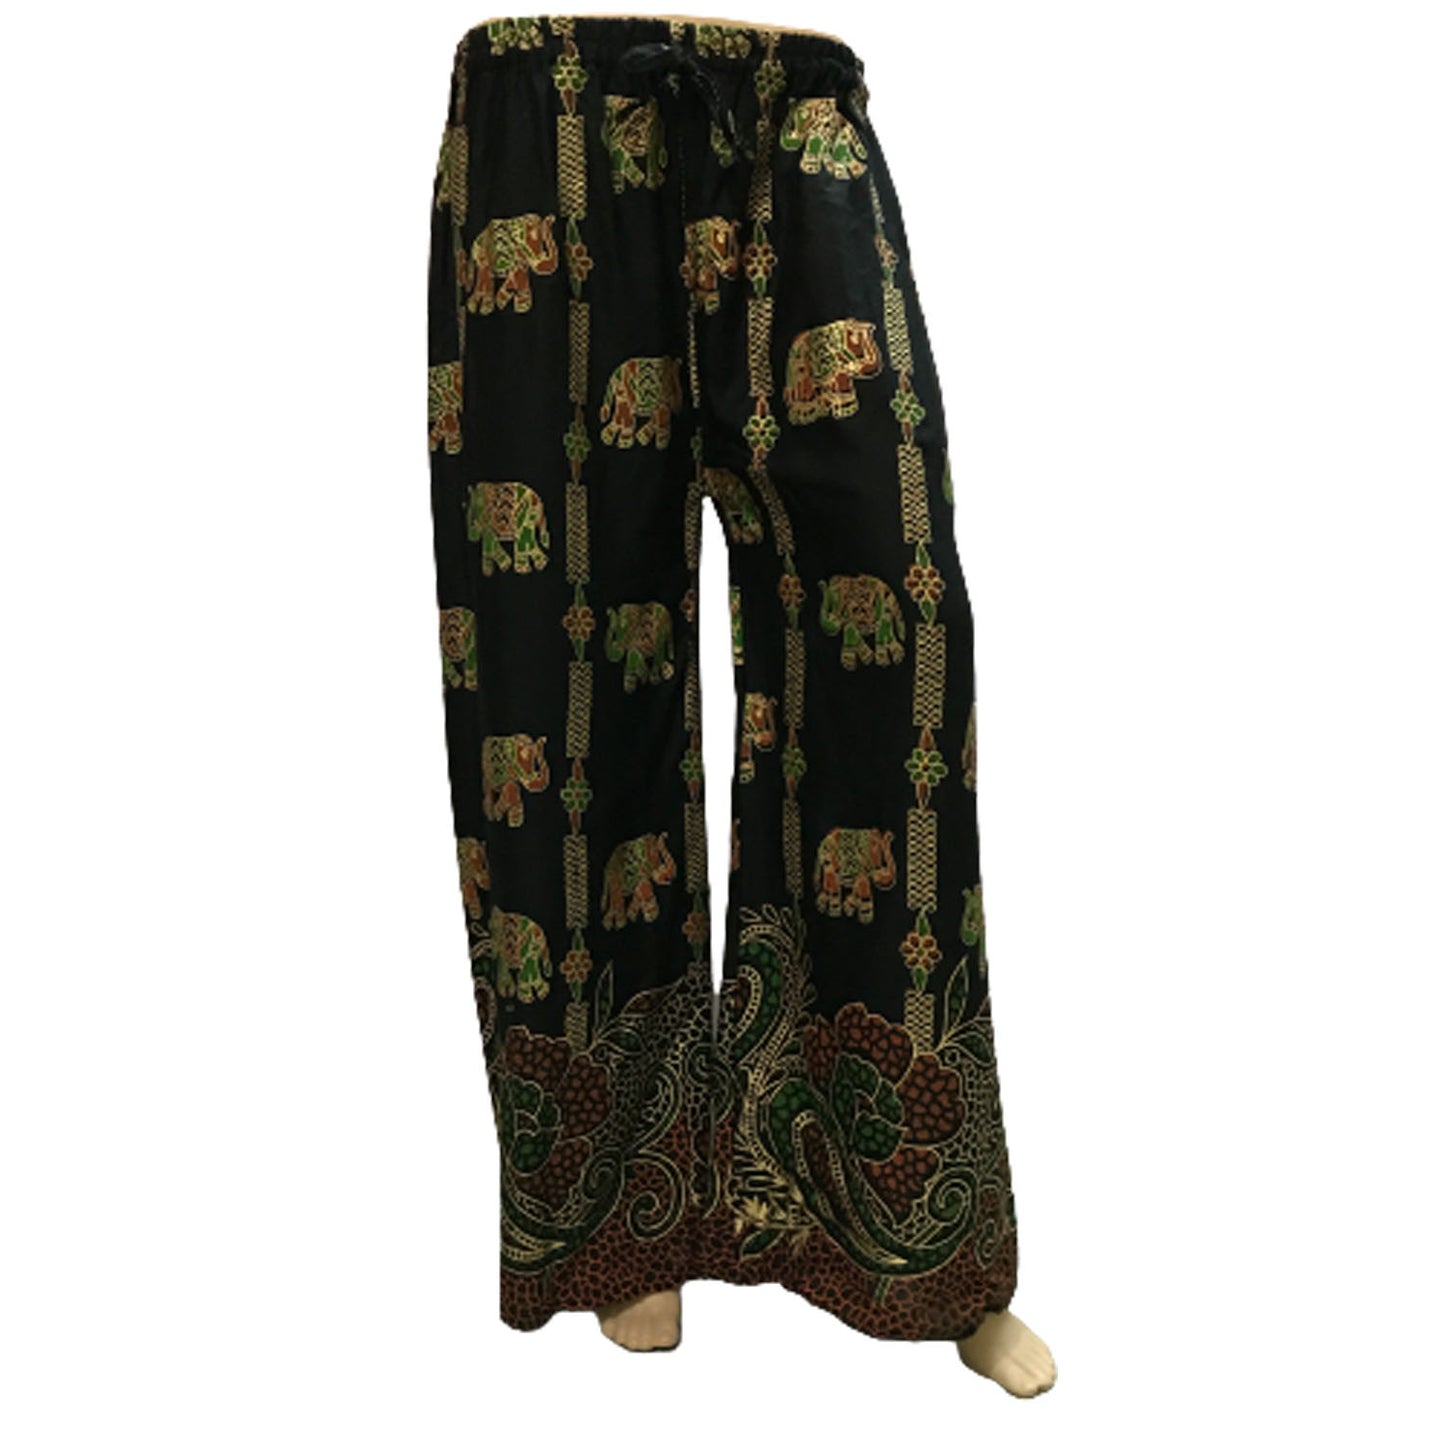 Ganesha Handicrafts Indian Style Elephant Print Loose Trousers, Trousers, Loose Trousers, Print Trousers, Elephant Print Lose Trousers, Indian Style Trousers, Black Trousers 